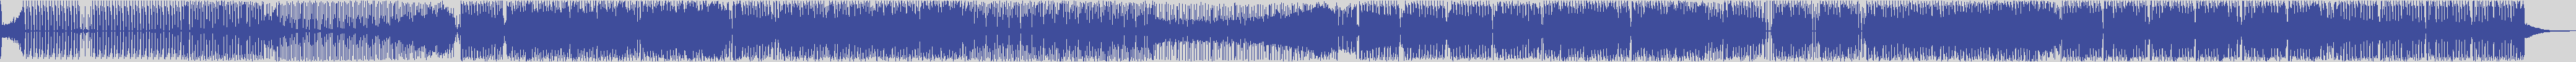 atomic_recordings [AR014] Franx - Revival [Original Mix] audio wave form